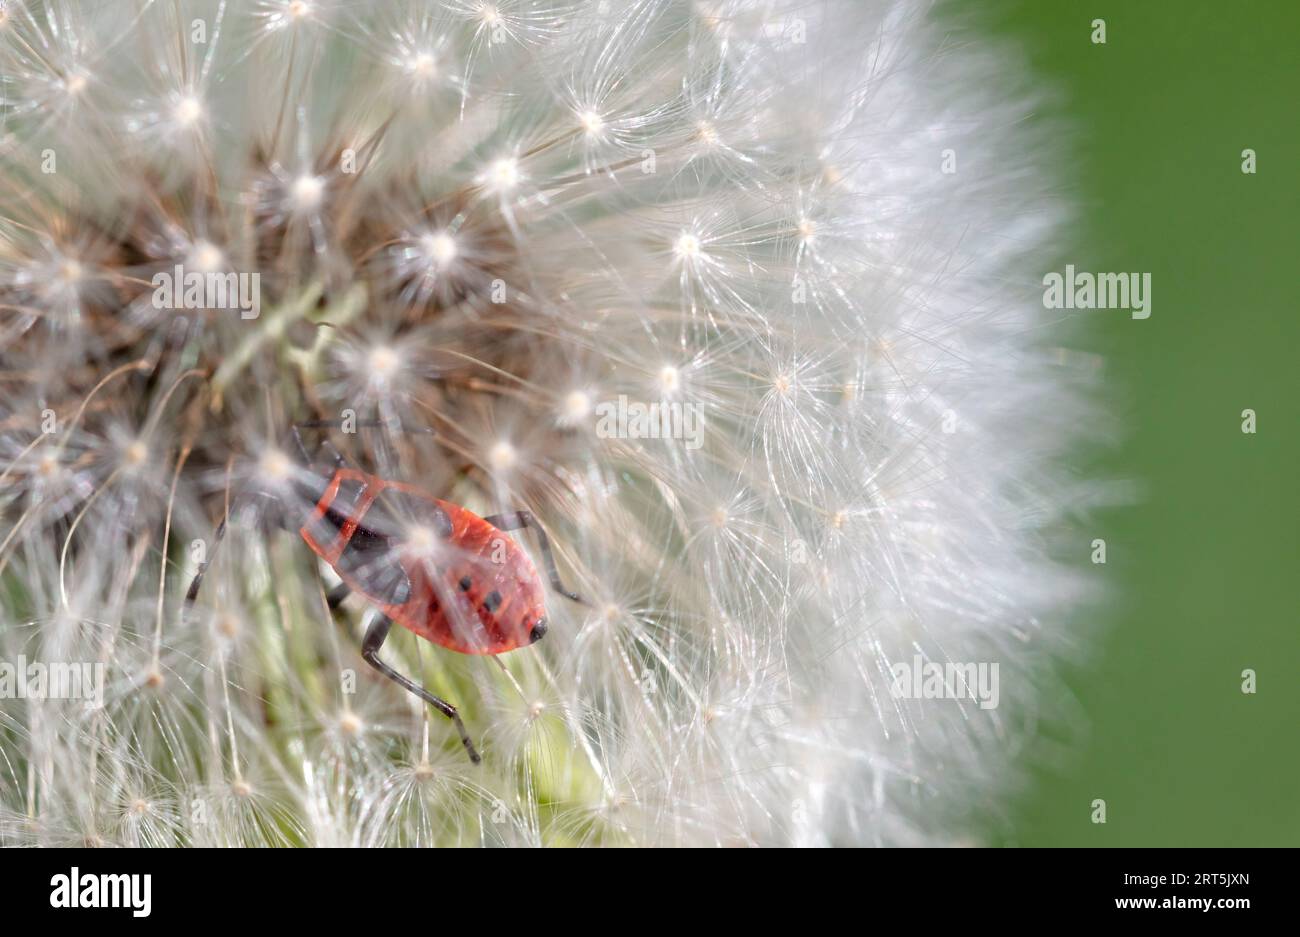 Close-up of a firebug (Pyrrhocoris apterus) crawling on a dandelion seed head, selective focus Stock Photo